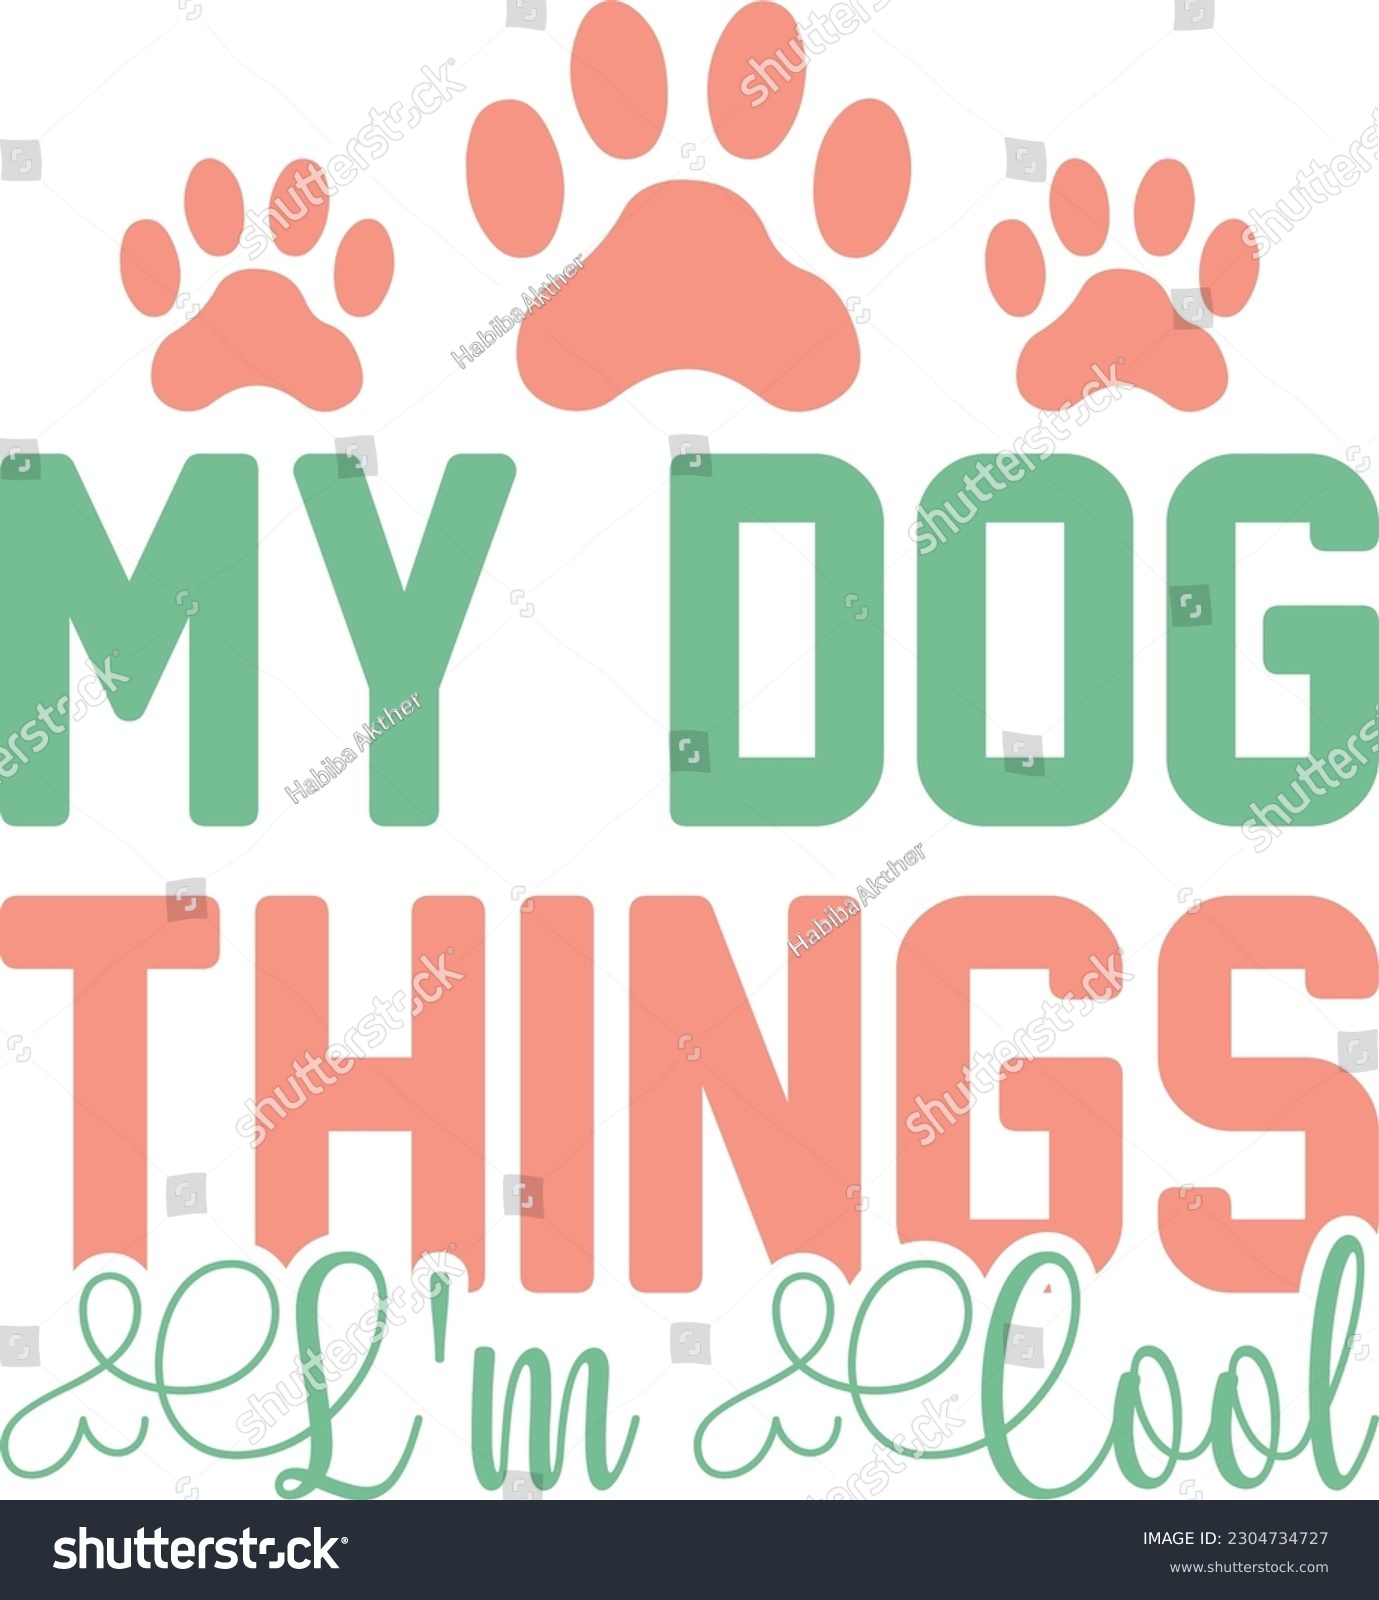 SVG of My dog things l'm cool,love,Dog mom,Puppy Love,Dog Mom Svg,Dog SVG,Silhouette,Dog Owner Svg, Funny Svg, Fur Mom Shirt Svg,Wine,Dog Mama,Dog Heart,Dog Paw,Eps,Labrador Svg,Pet Svg,Vector, svg